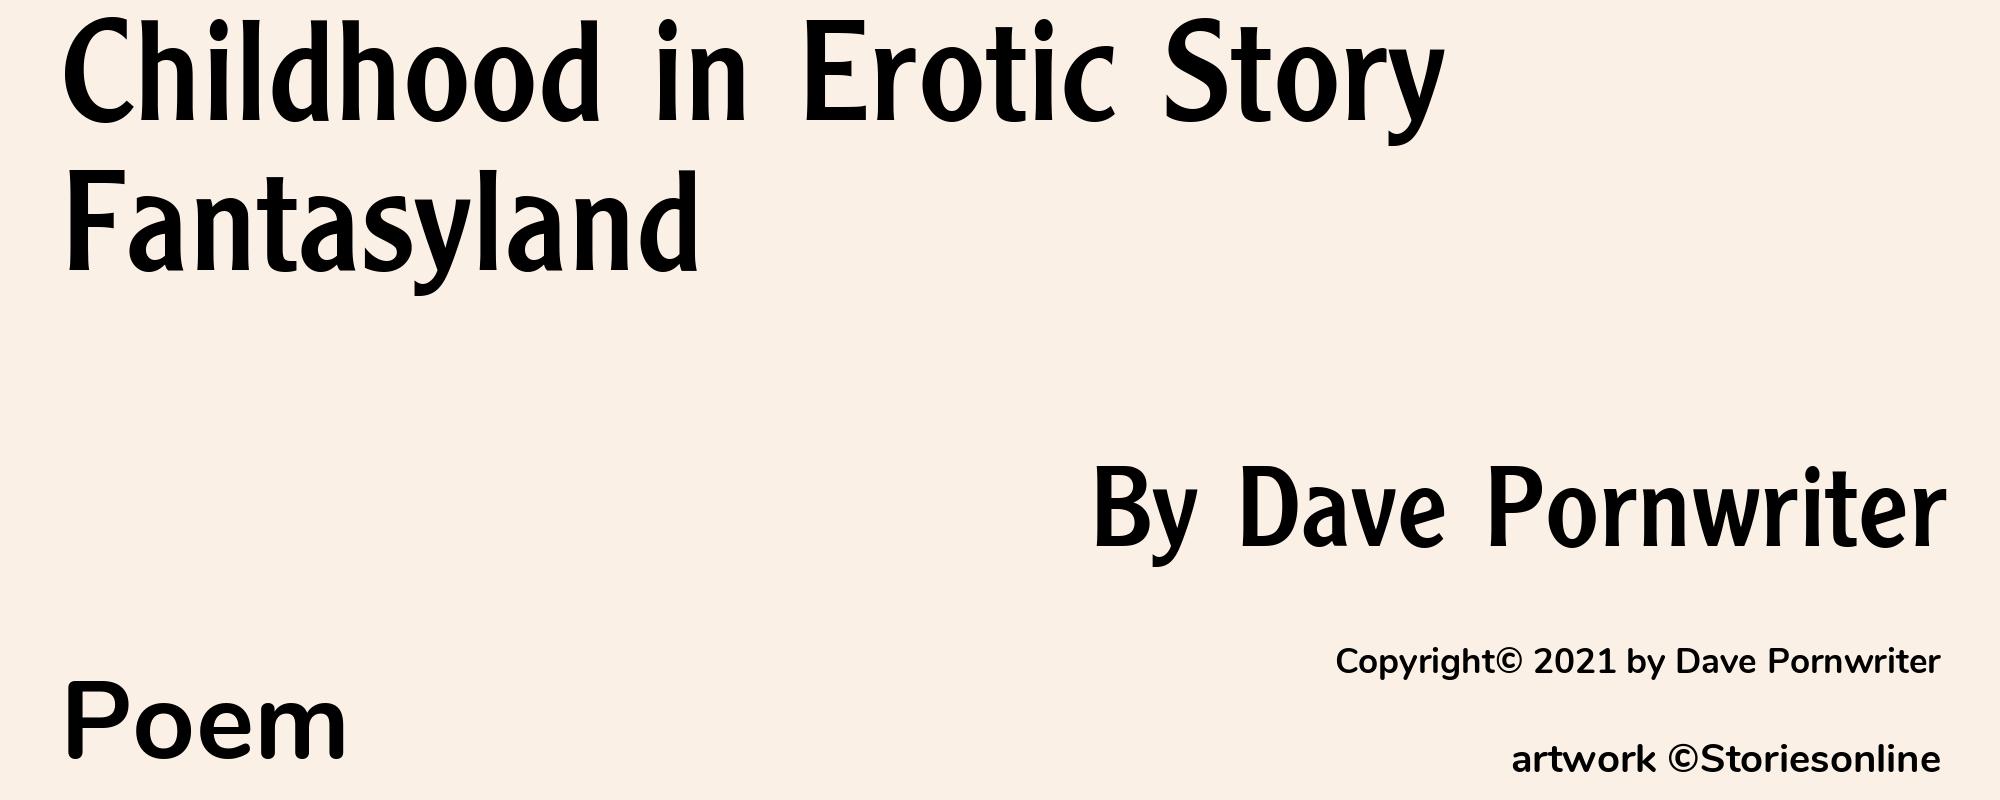 Childhood in Erotic Story Fantasyland - Cover